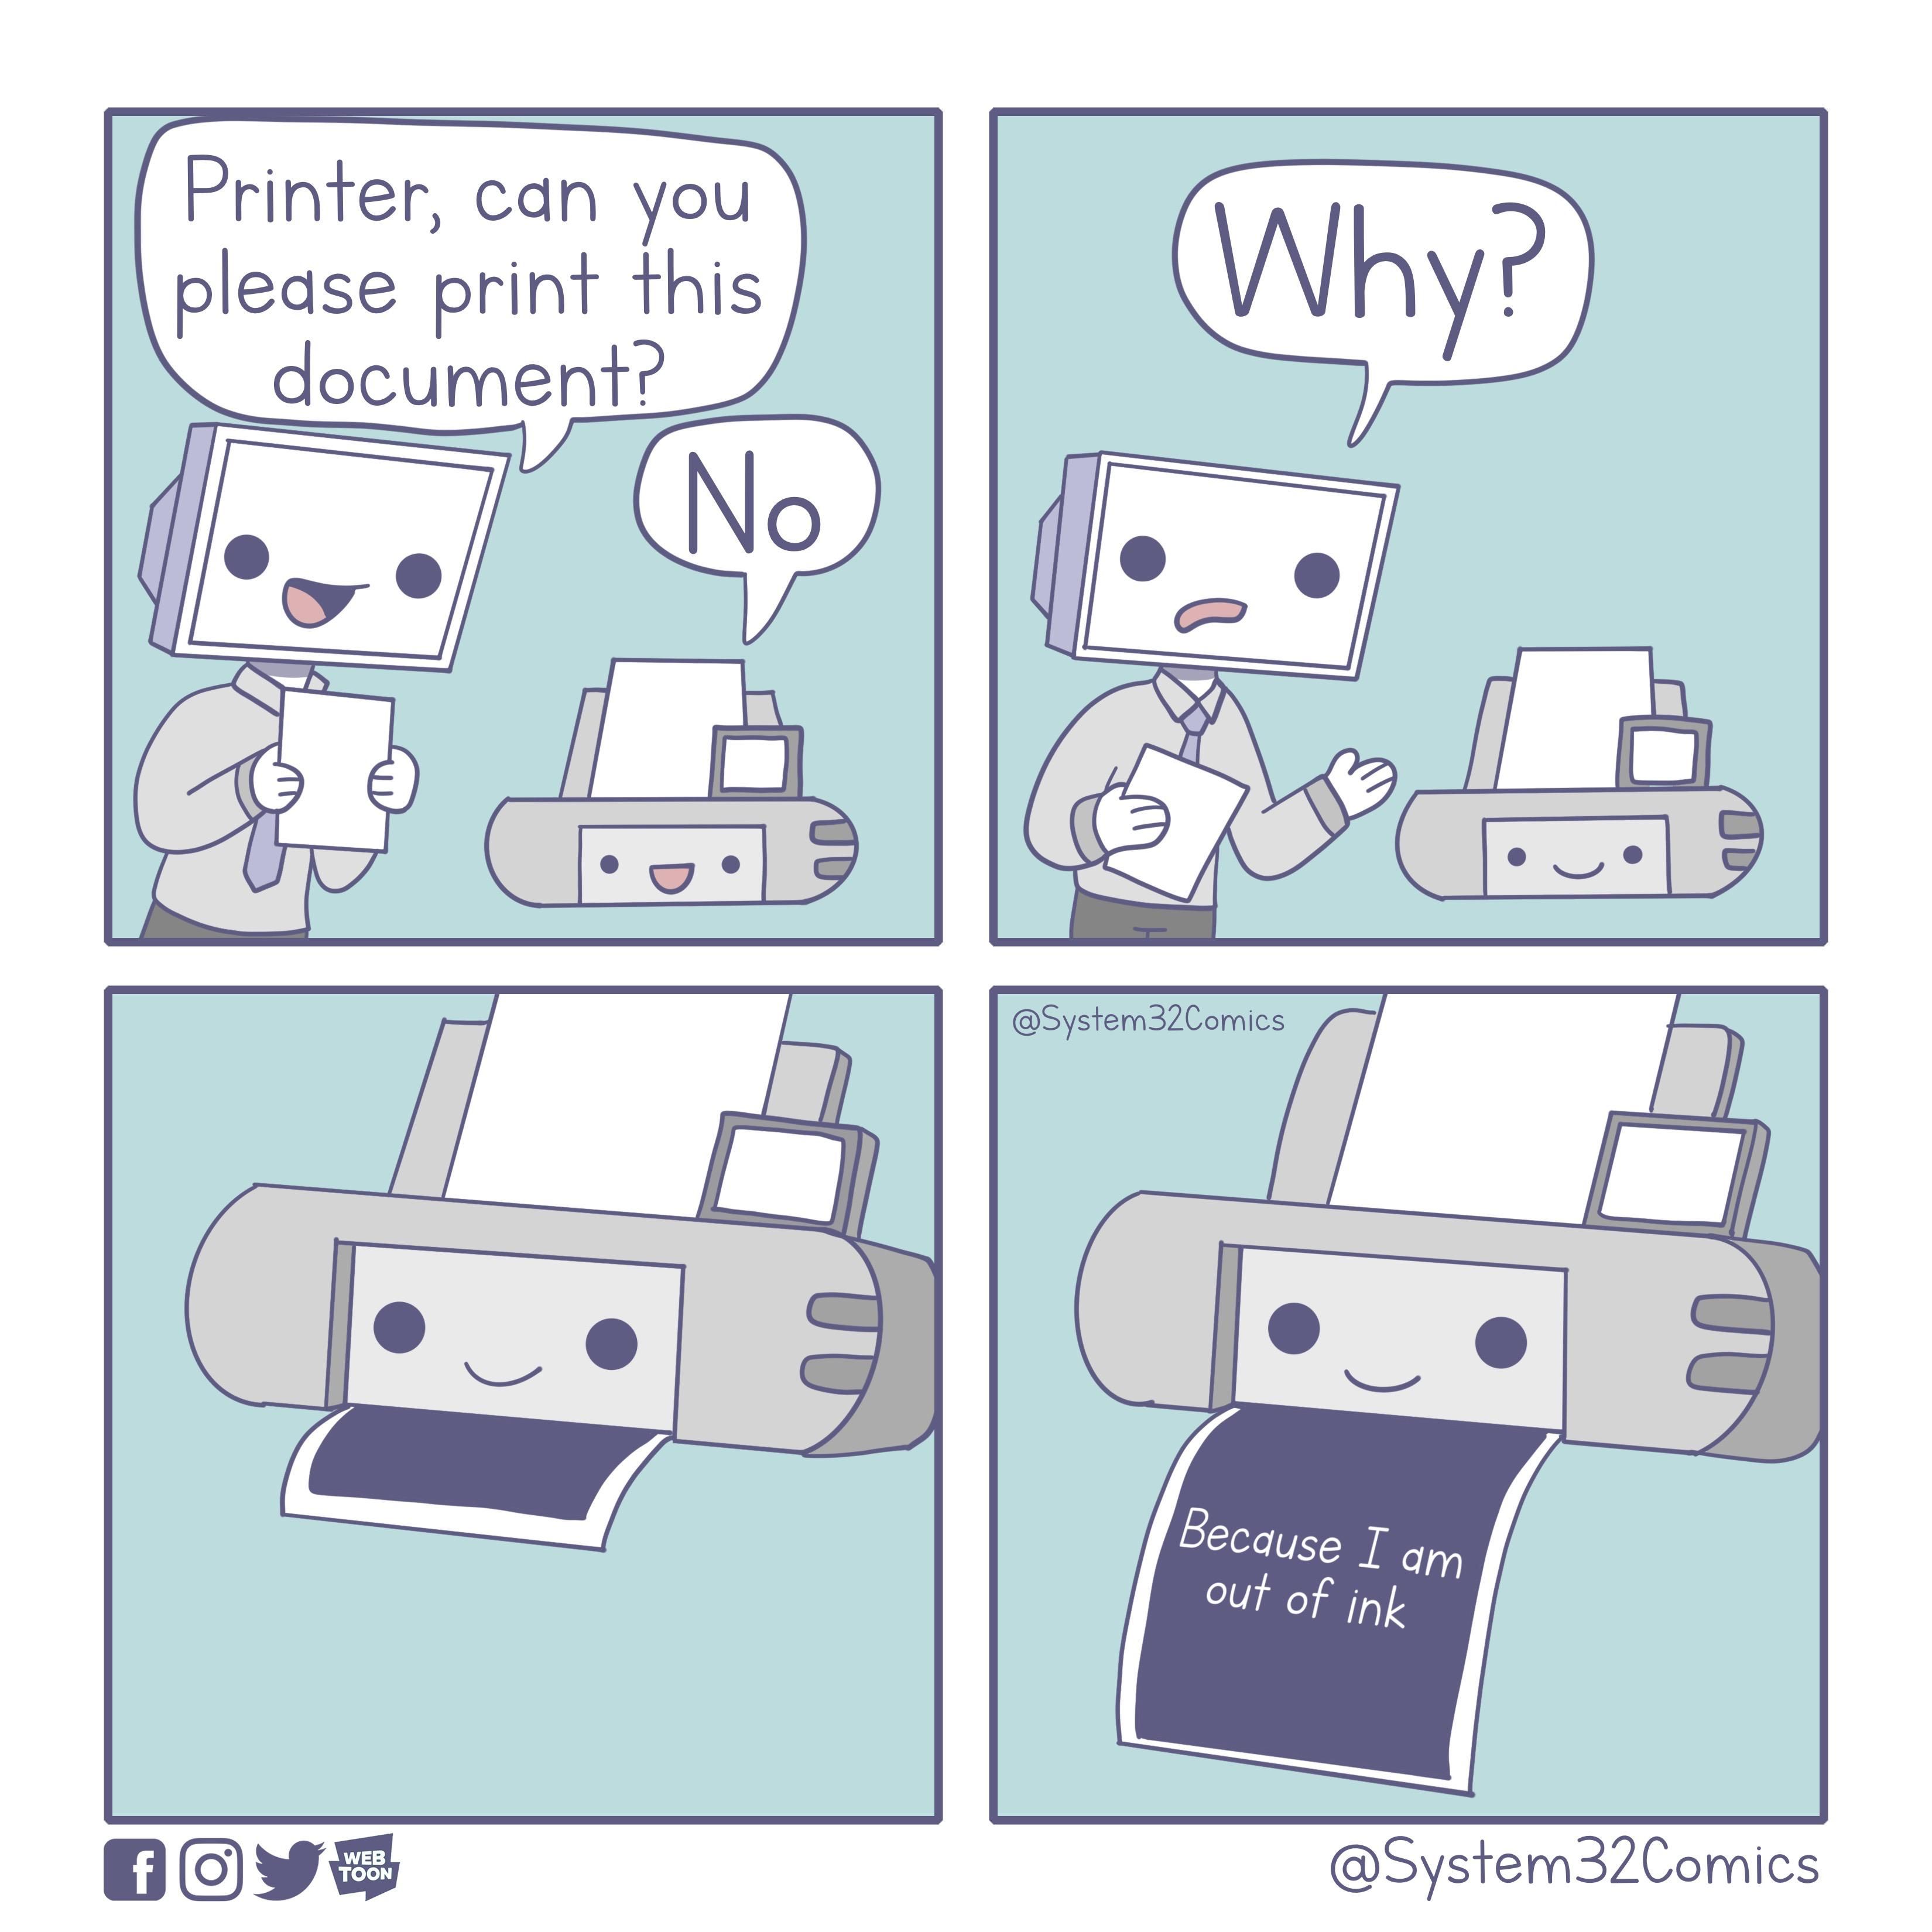 *** Printer